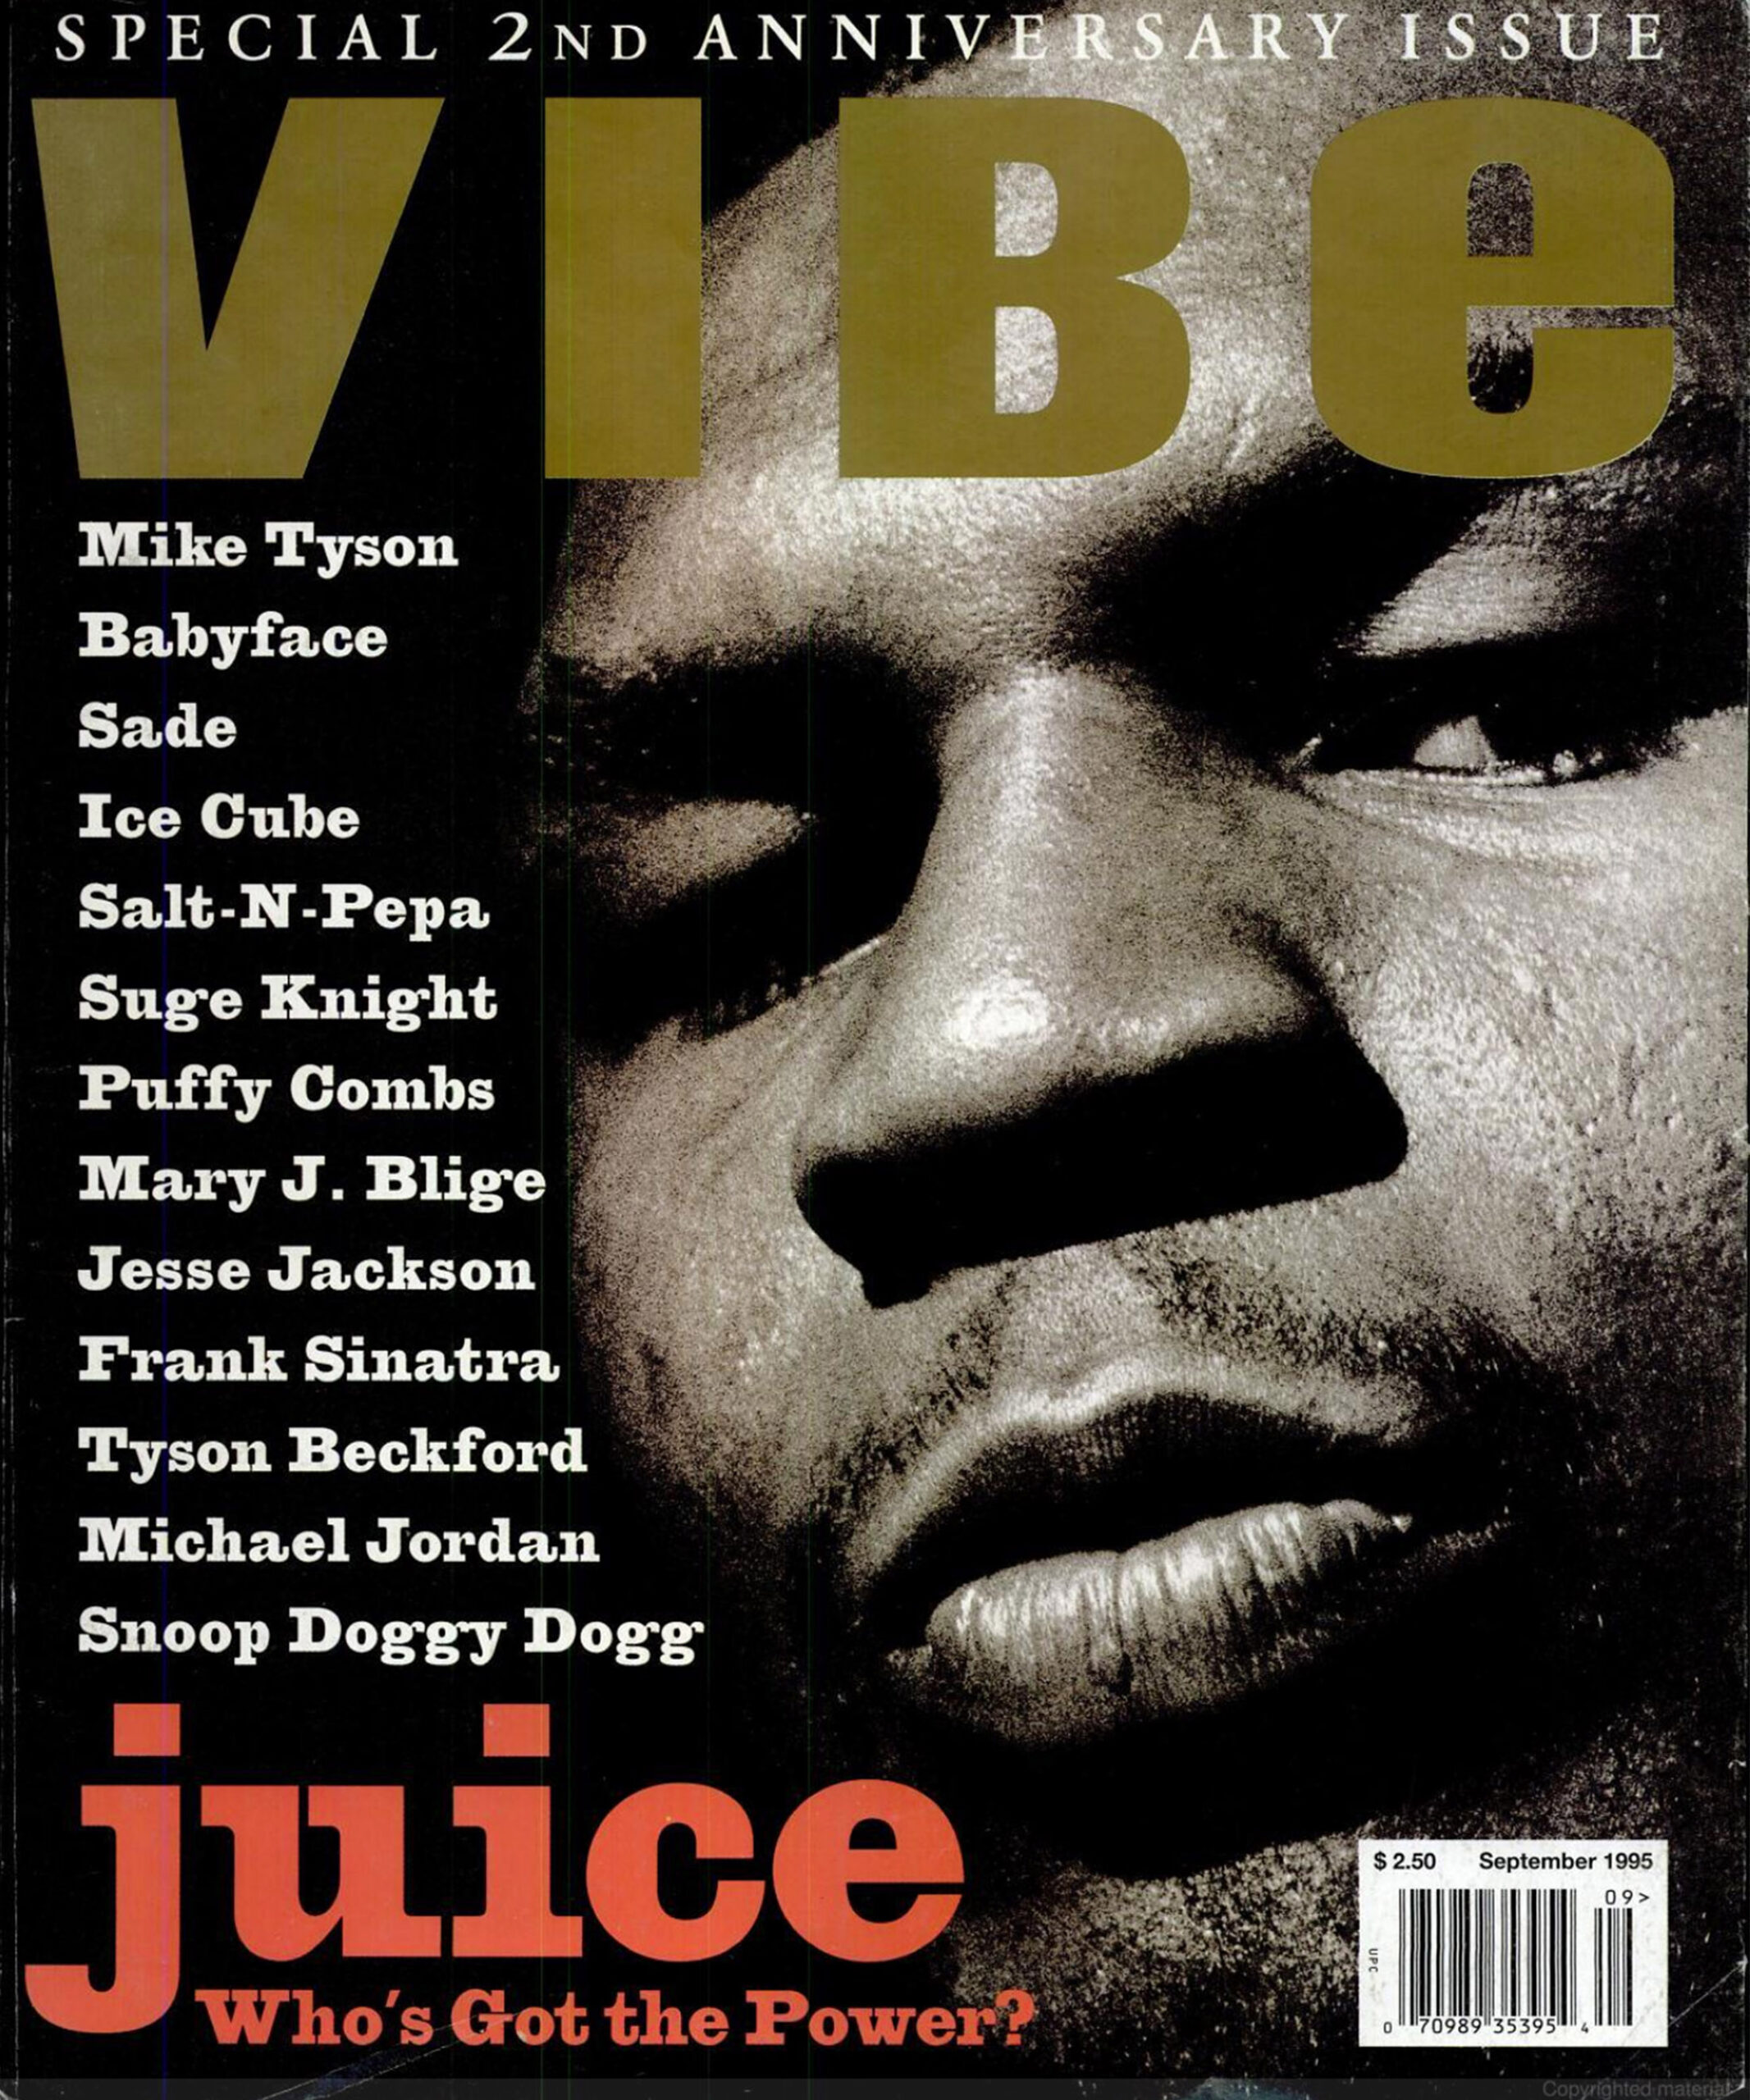 Vibe Juice who has the power Hip Hop Heat Transfers